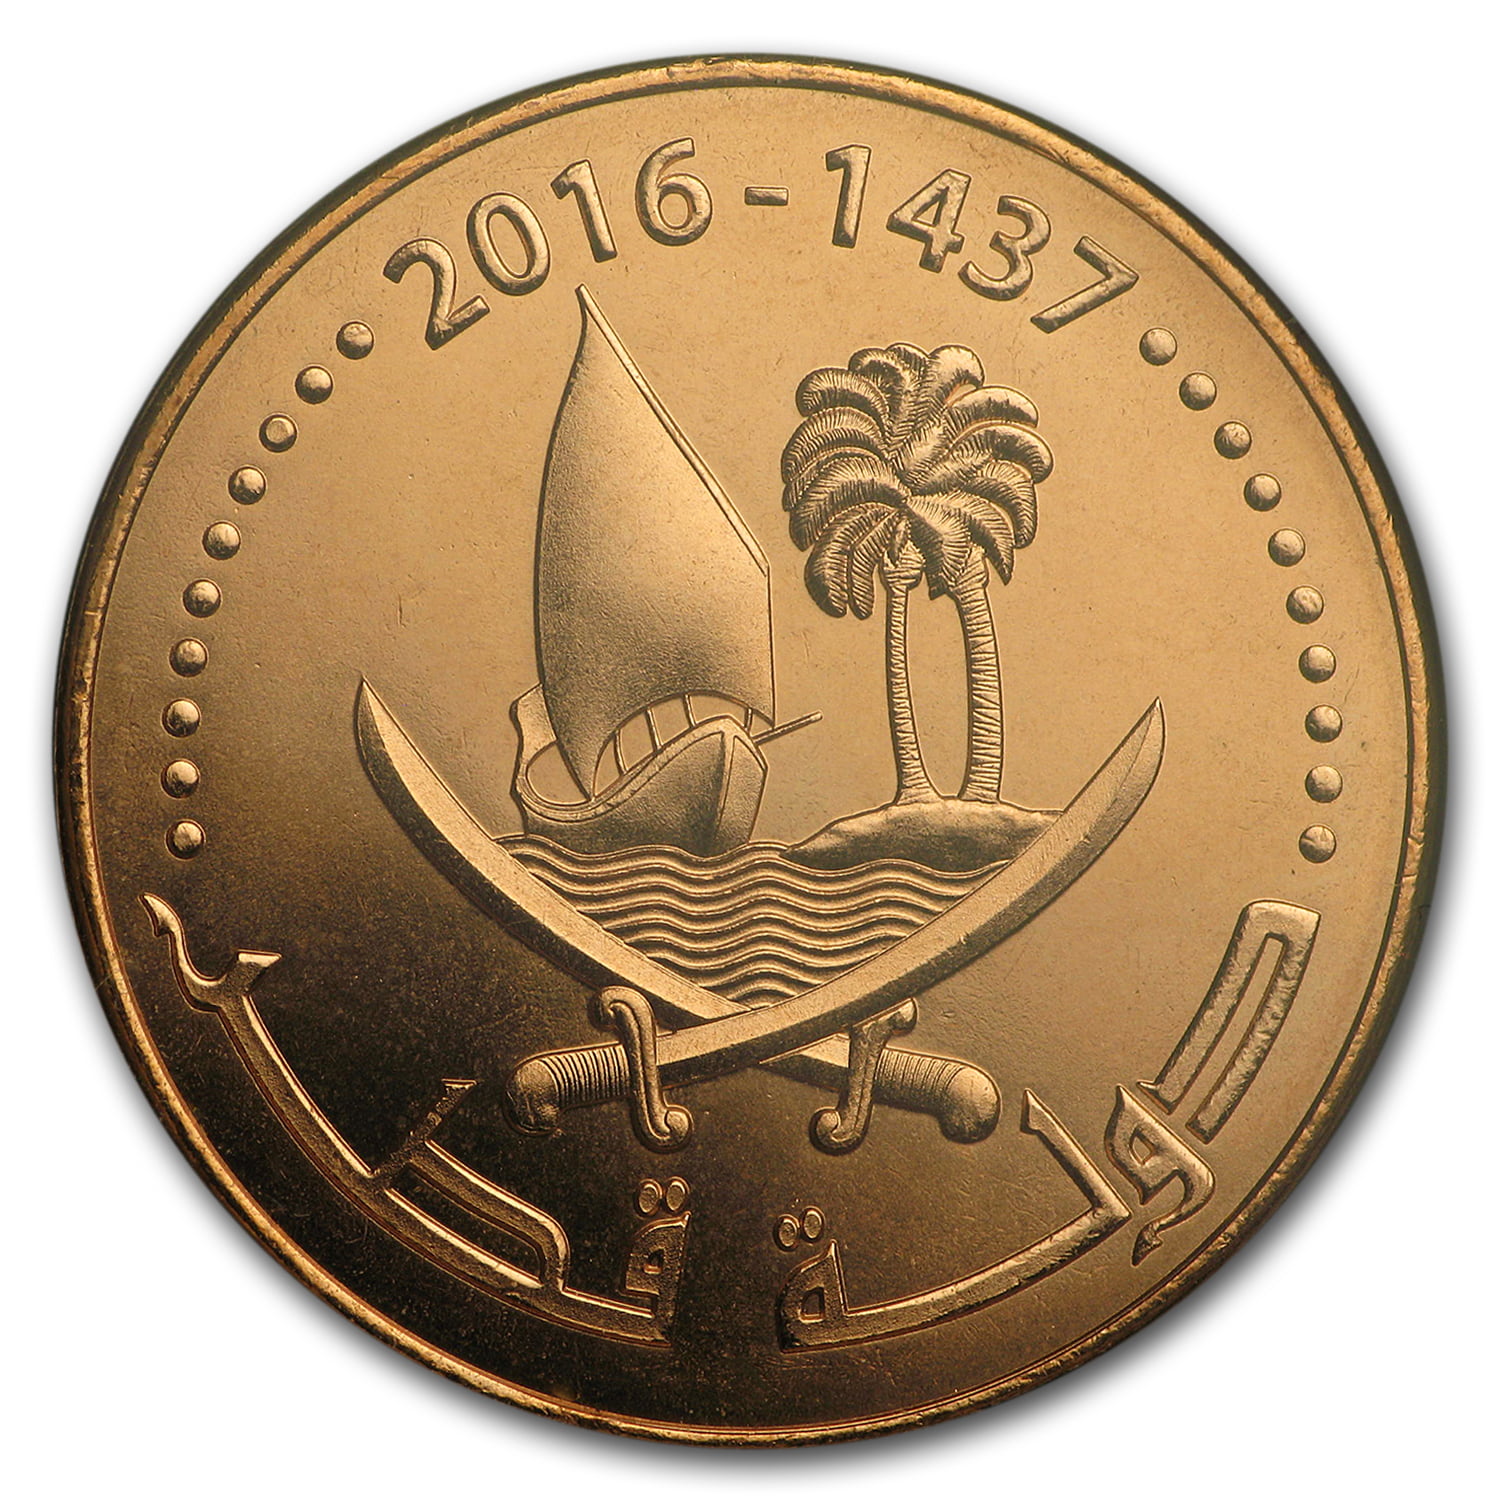 13000 дирхам. Qatar Coins.